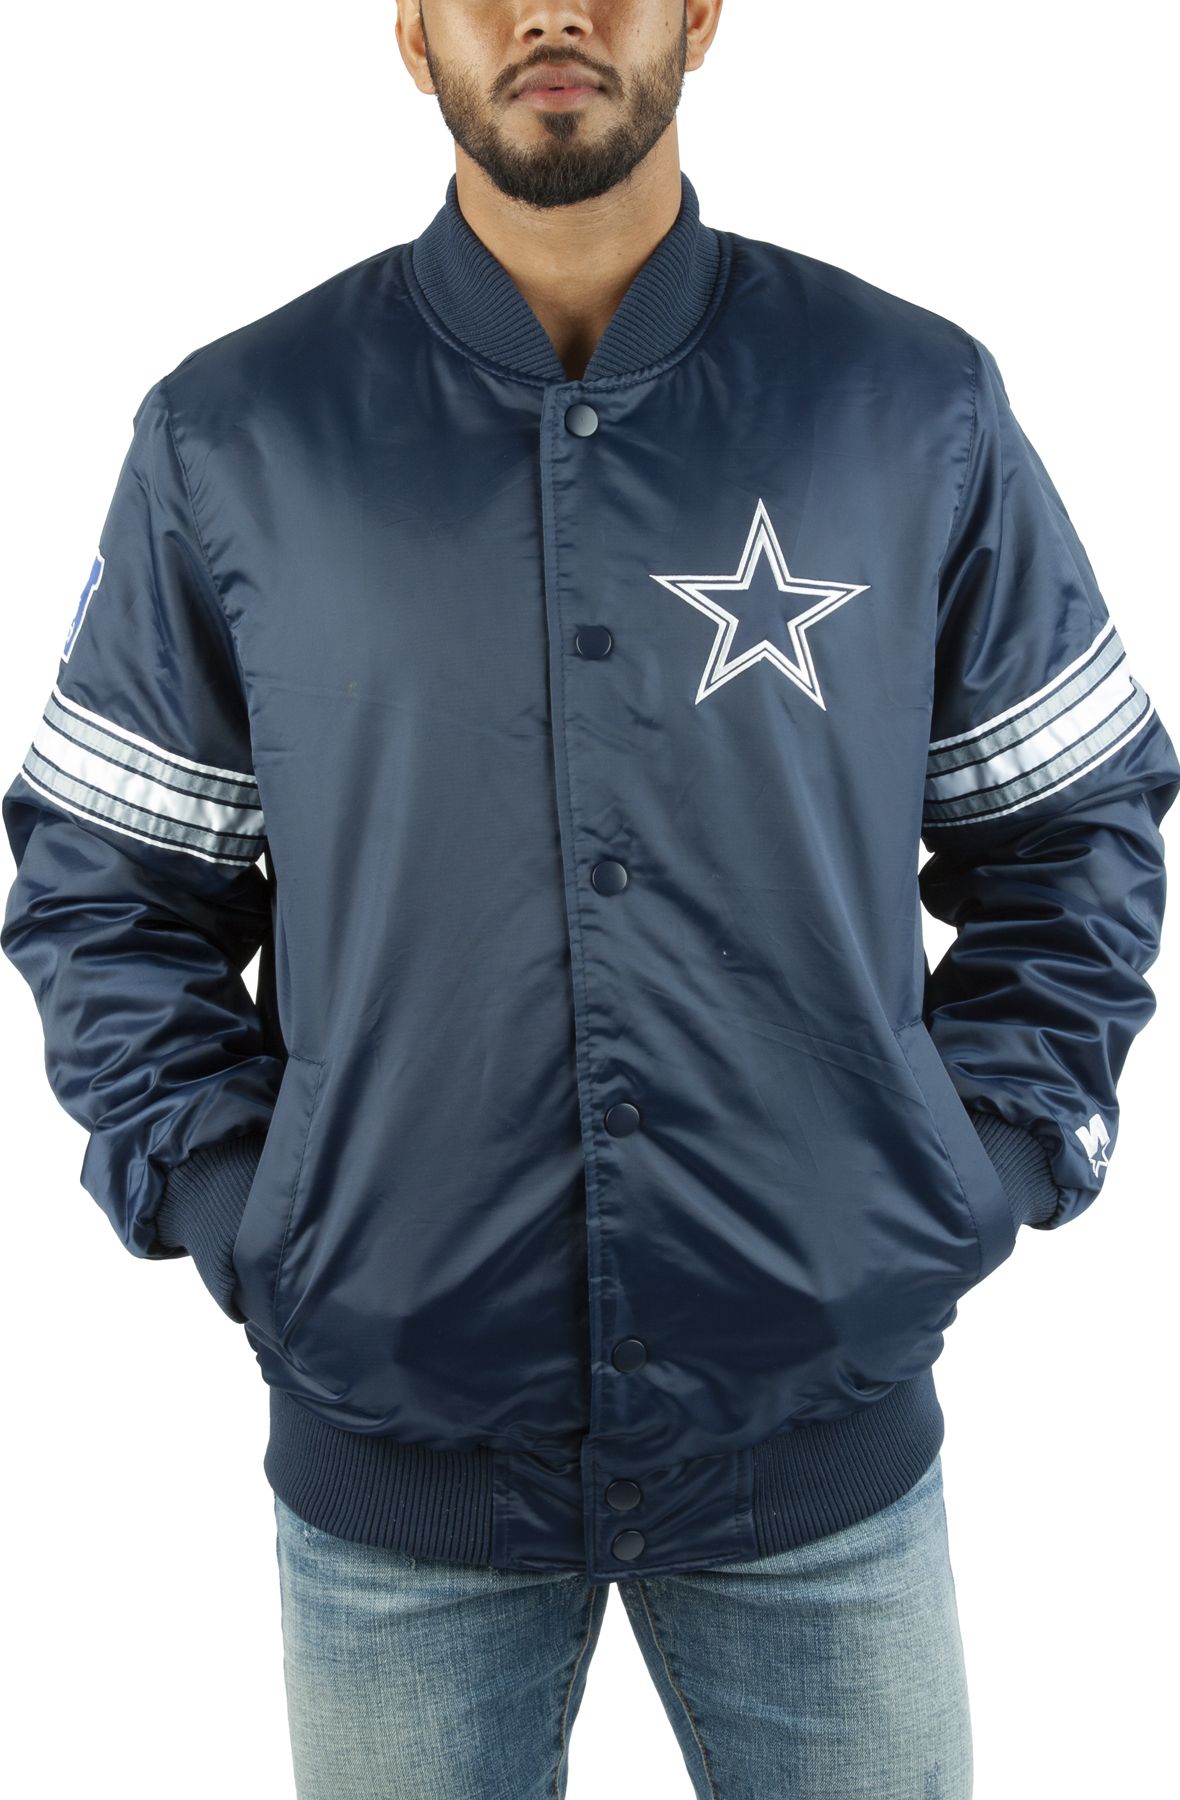 Starter Dallas Cowboys Pick and Roll Jacket Navy/Grey